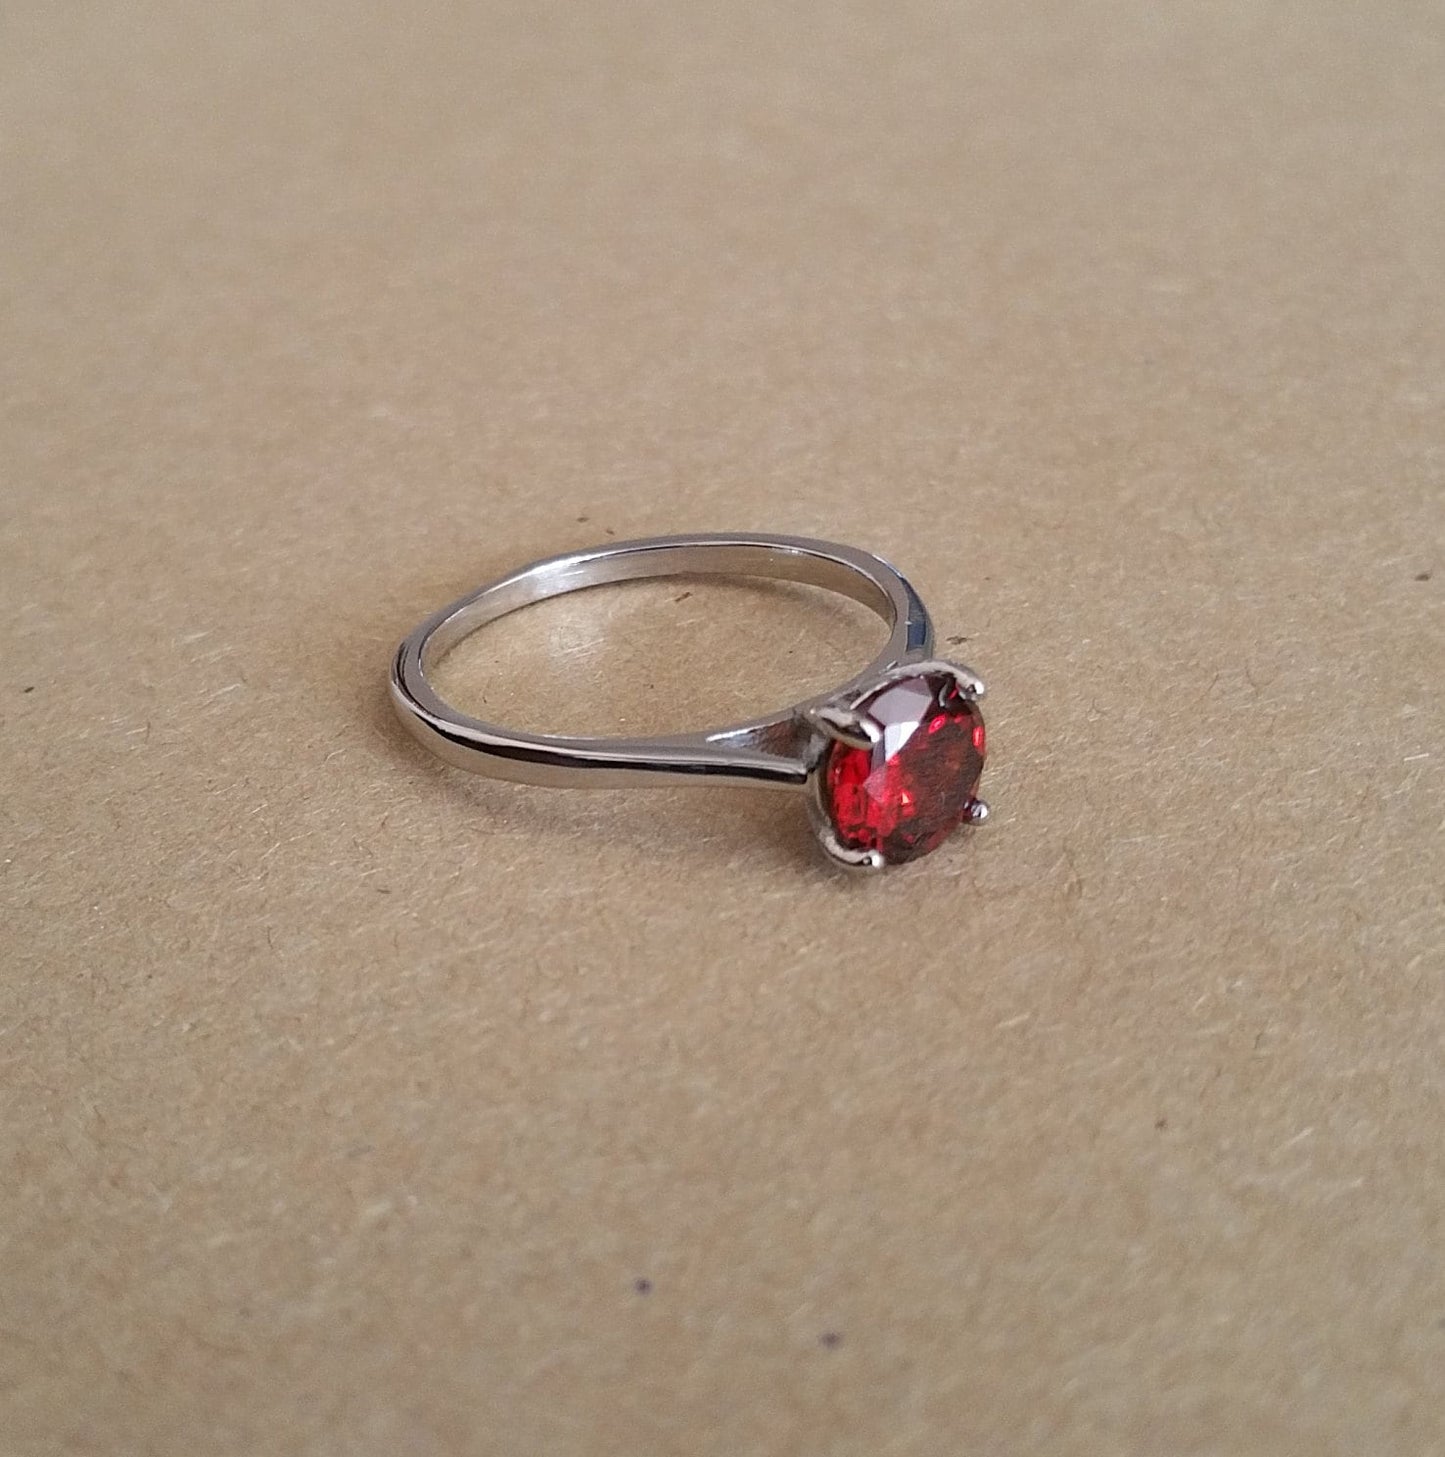 Genuine 1.5ct Garnet solitaire ring in Titanium or White Gold - engagement ring - wedding ring - handmade ring